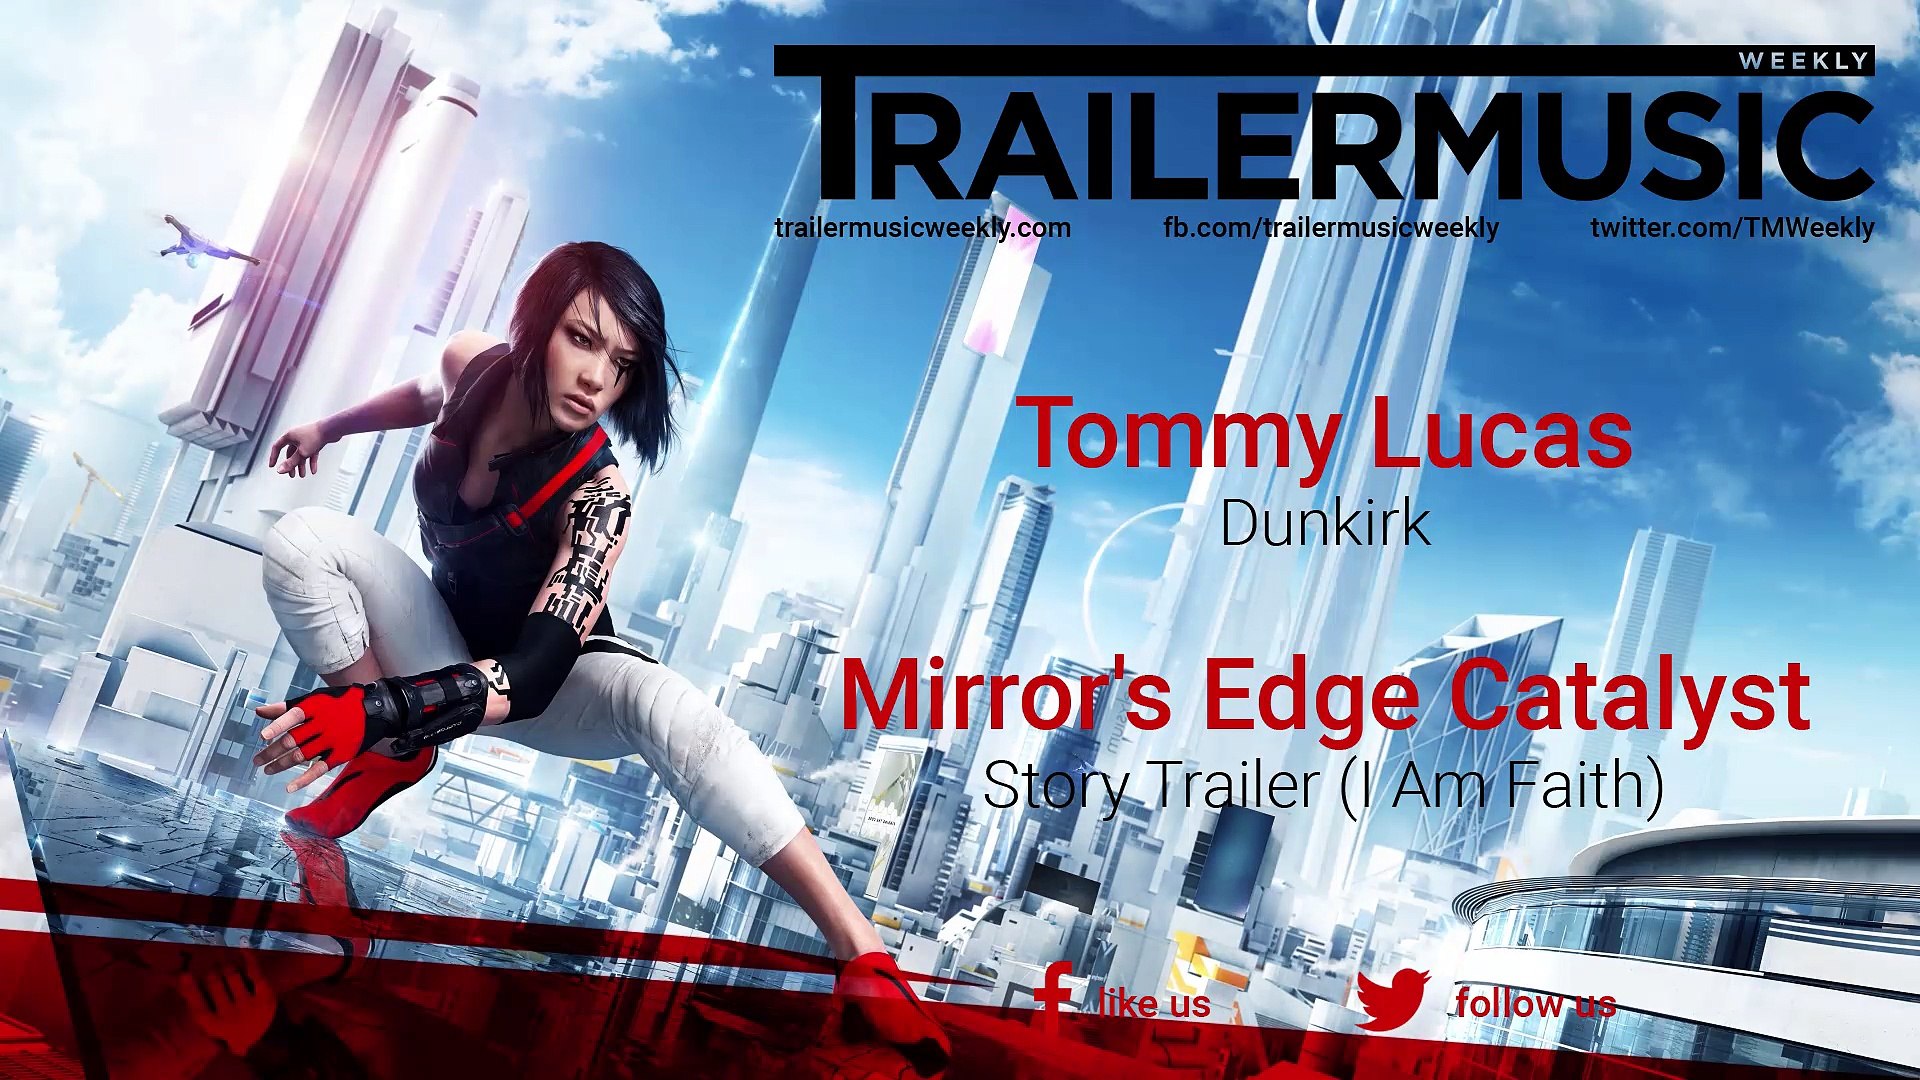 Mirror's Edge Trailer 